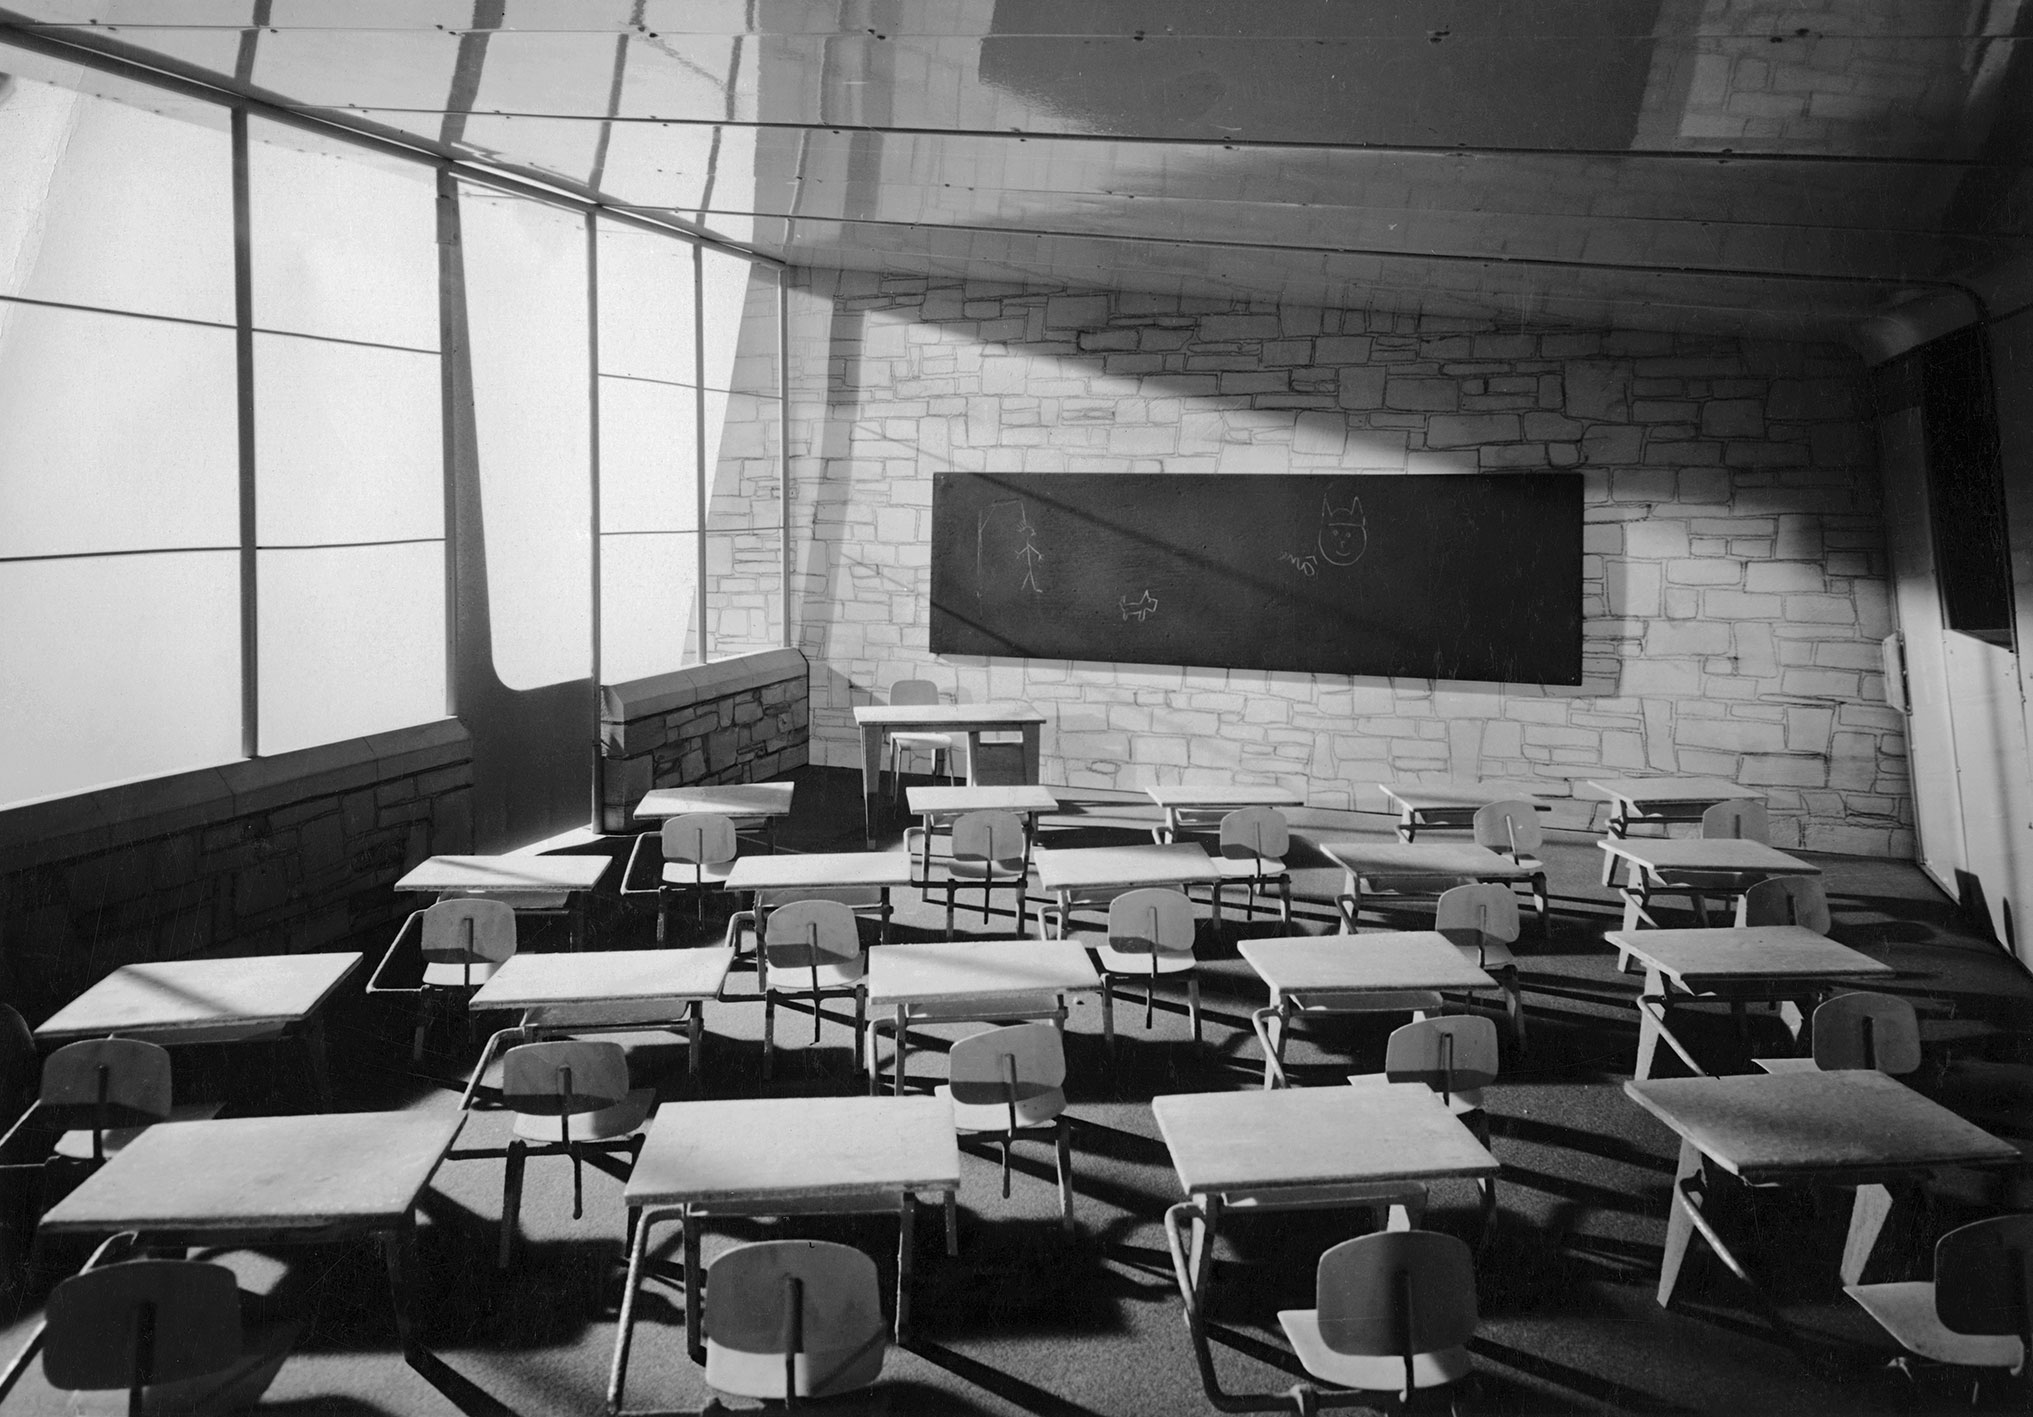 Model of a Coque class-room furnished with single-seater school desks, presented at the exhibition at the École des Beaux-Arts de Paris, organized by the Ministère de l’Éducation Nationale, summer 1952.